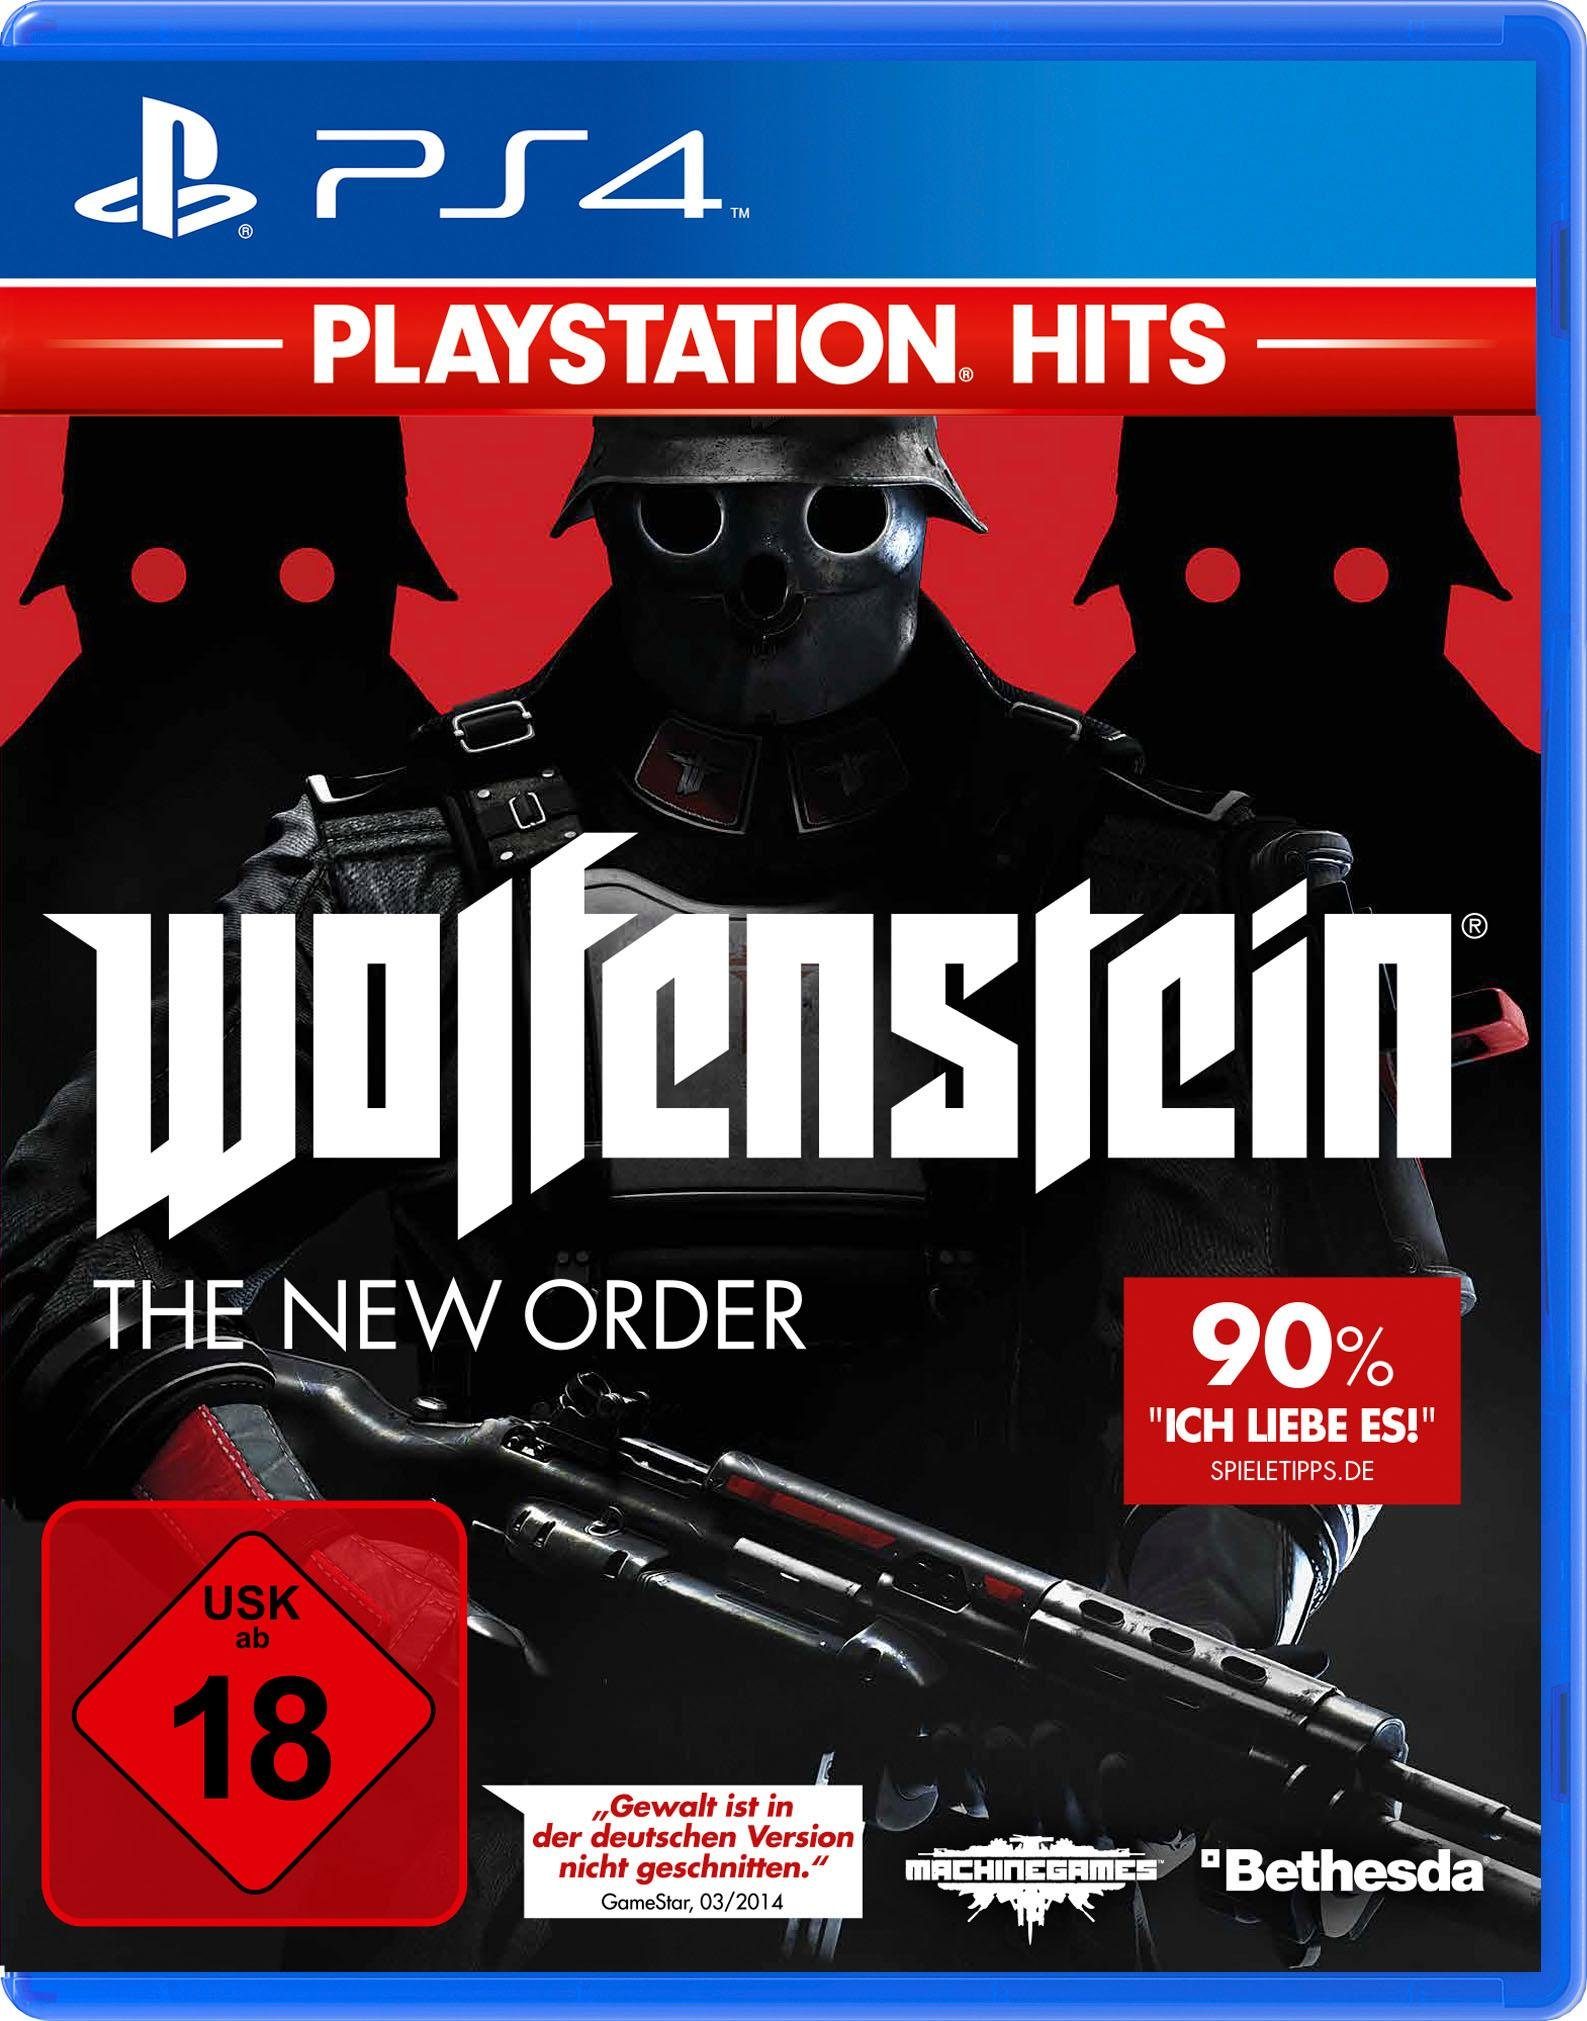 NEW ORDER Pyramide THE Wolfenstein: 4, PlayStation Software